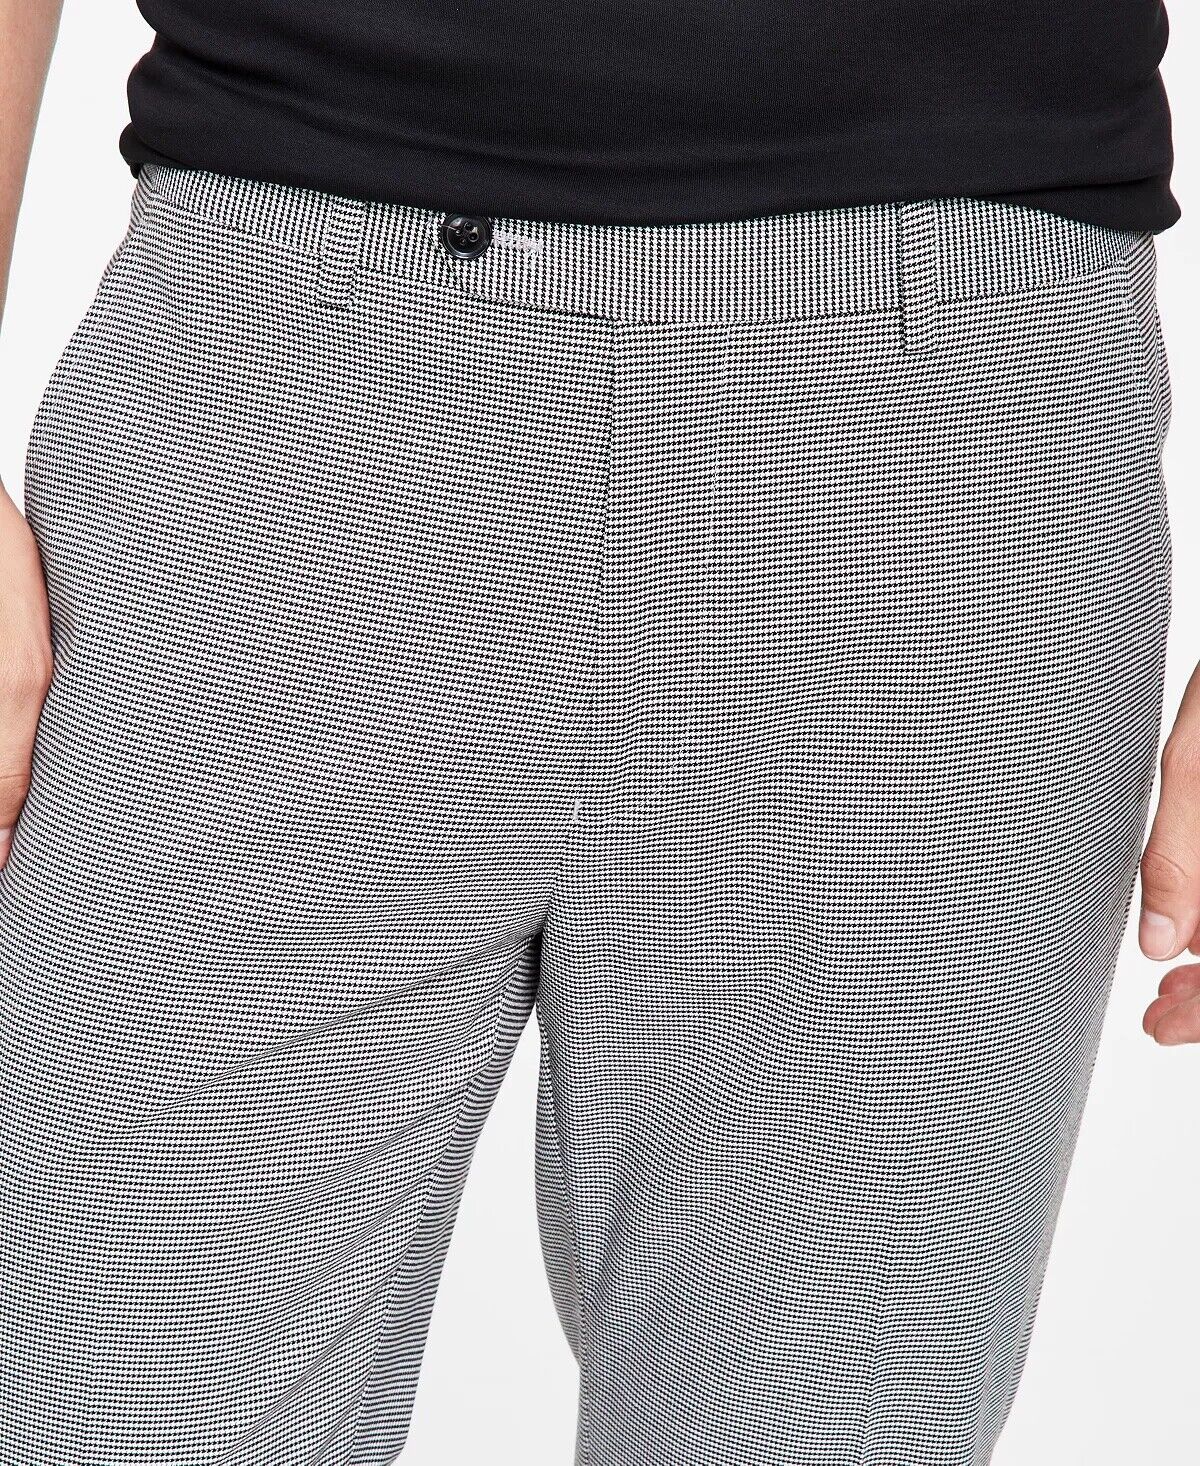 ALFANI Men's Slim-Fit Black & White Check Suit Dress Pants 34 x 32